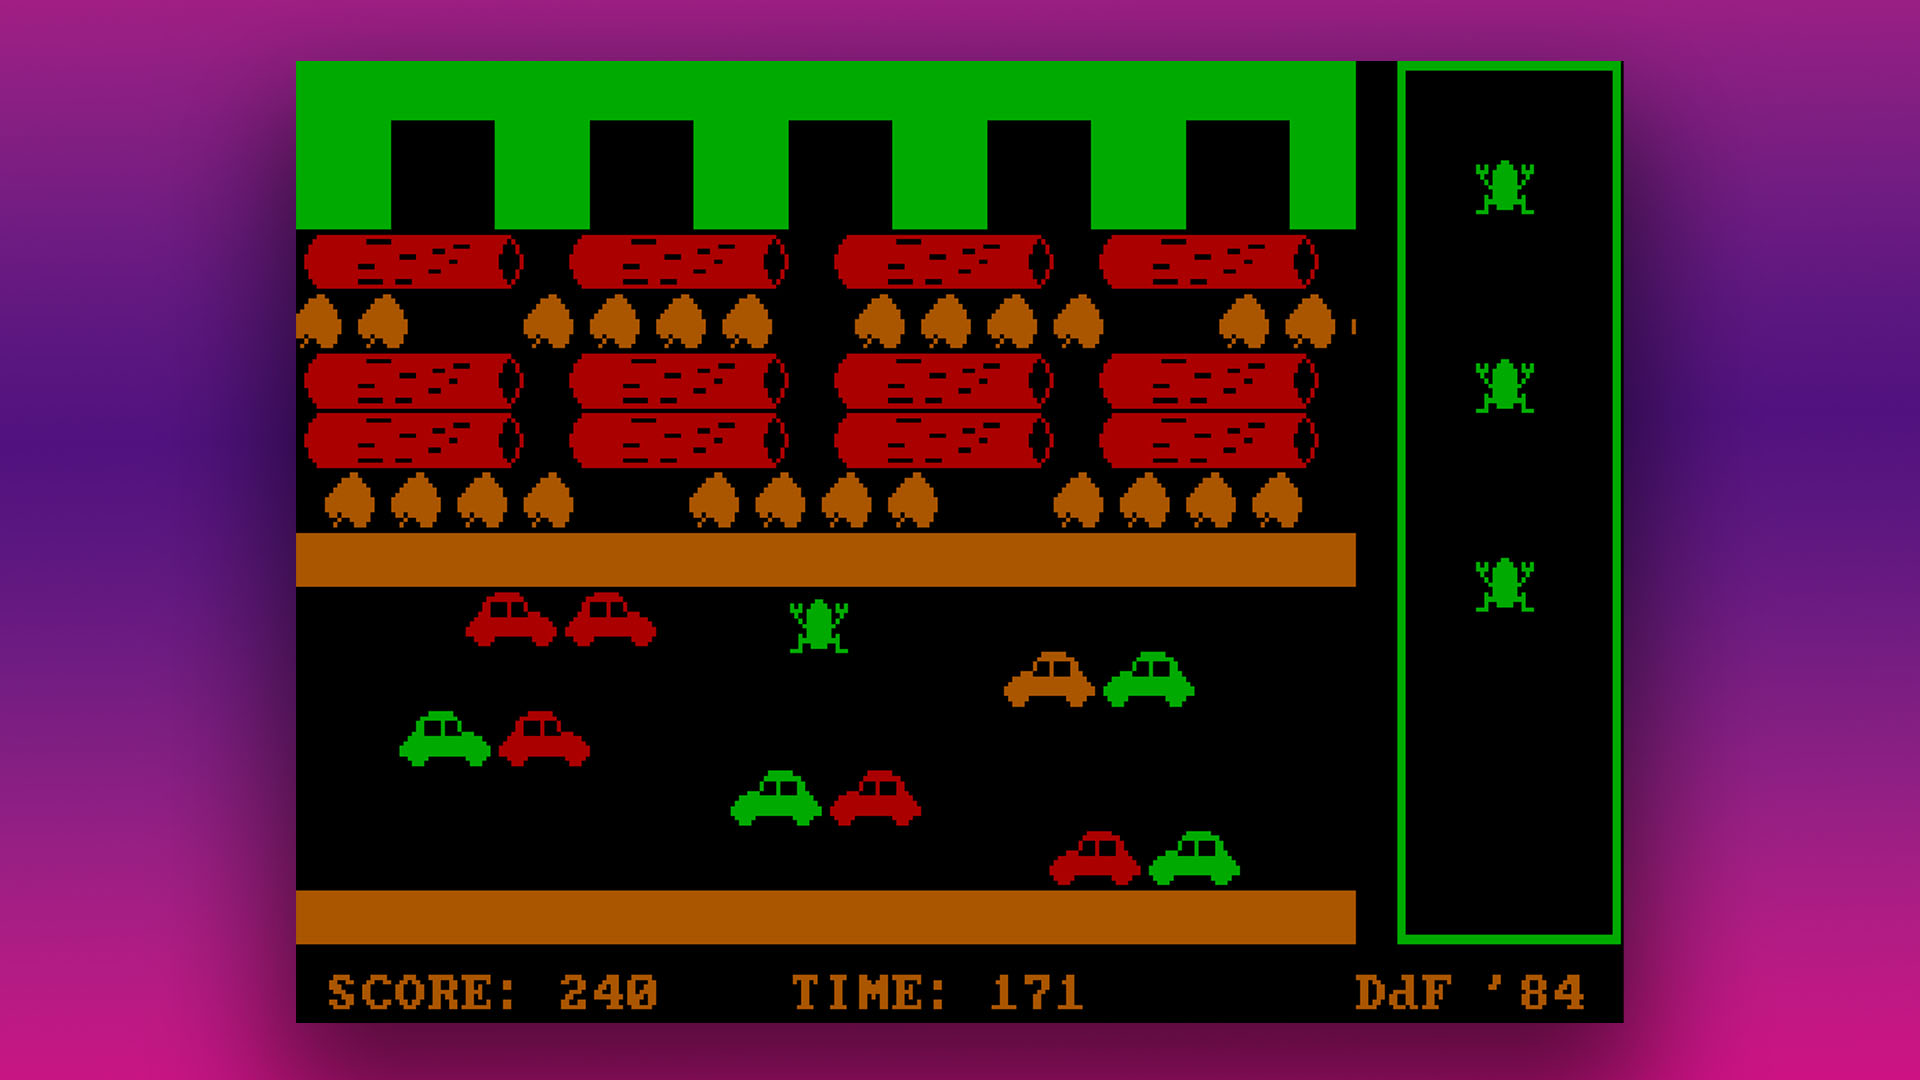 CGA graphics: Frogger clone Ribit screenshot - BIOS mode 4, palette 0, low intensity